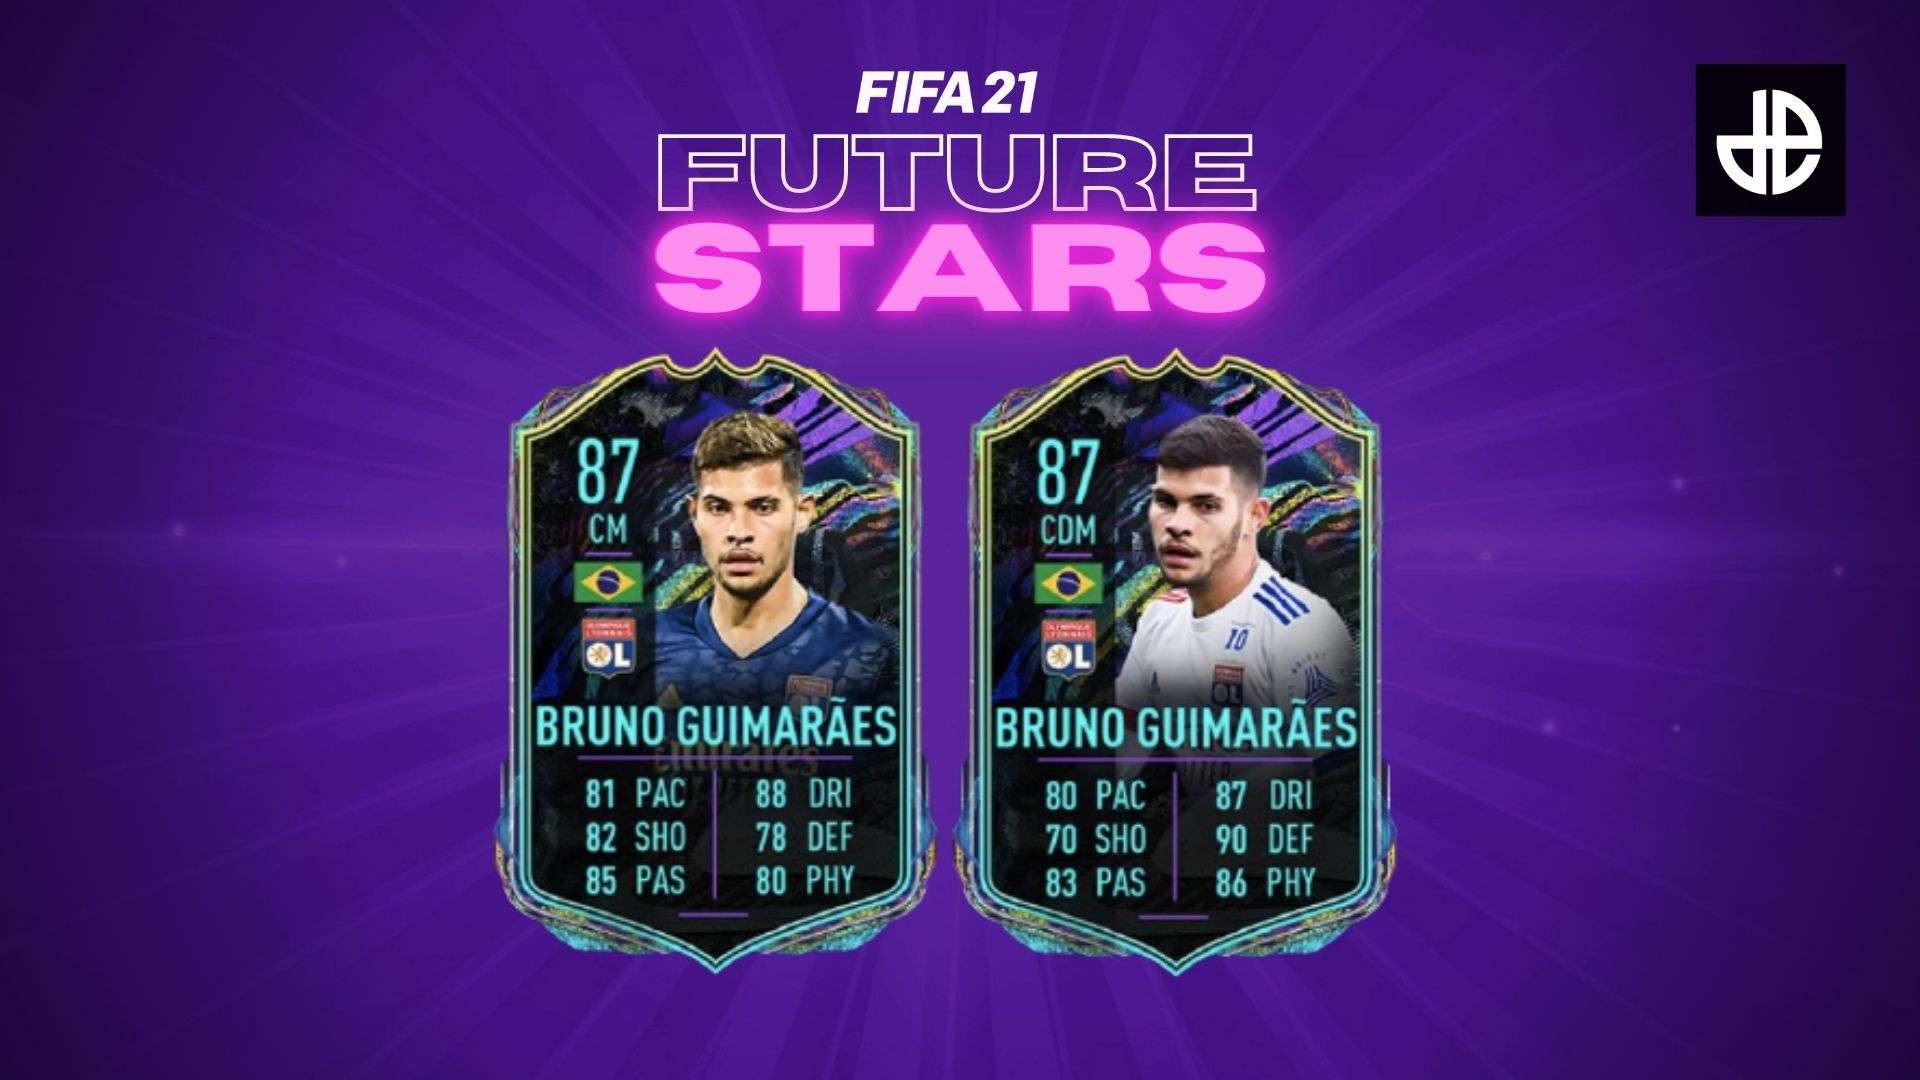 FIFA 21 Future stars sbc